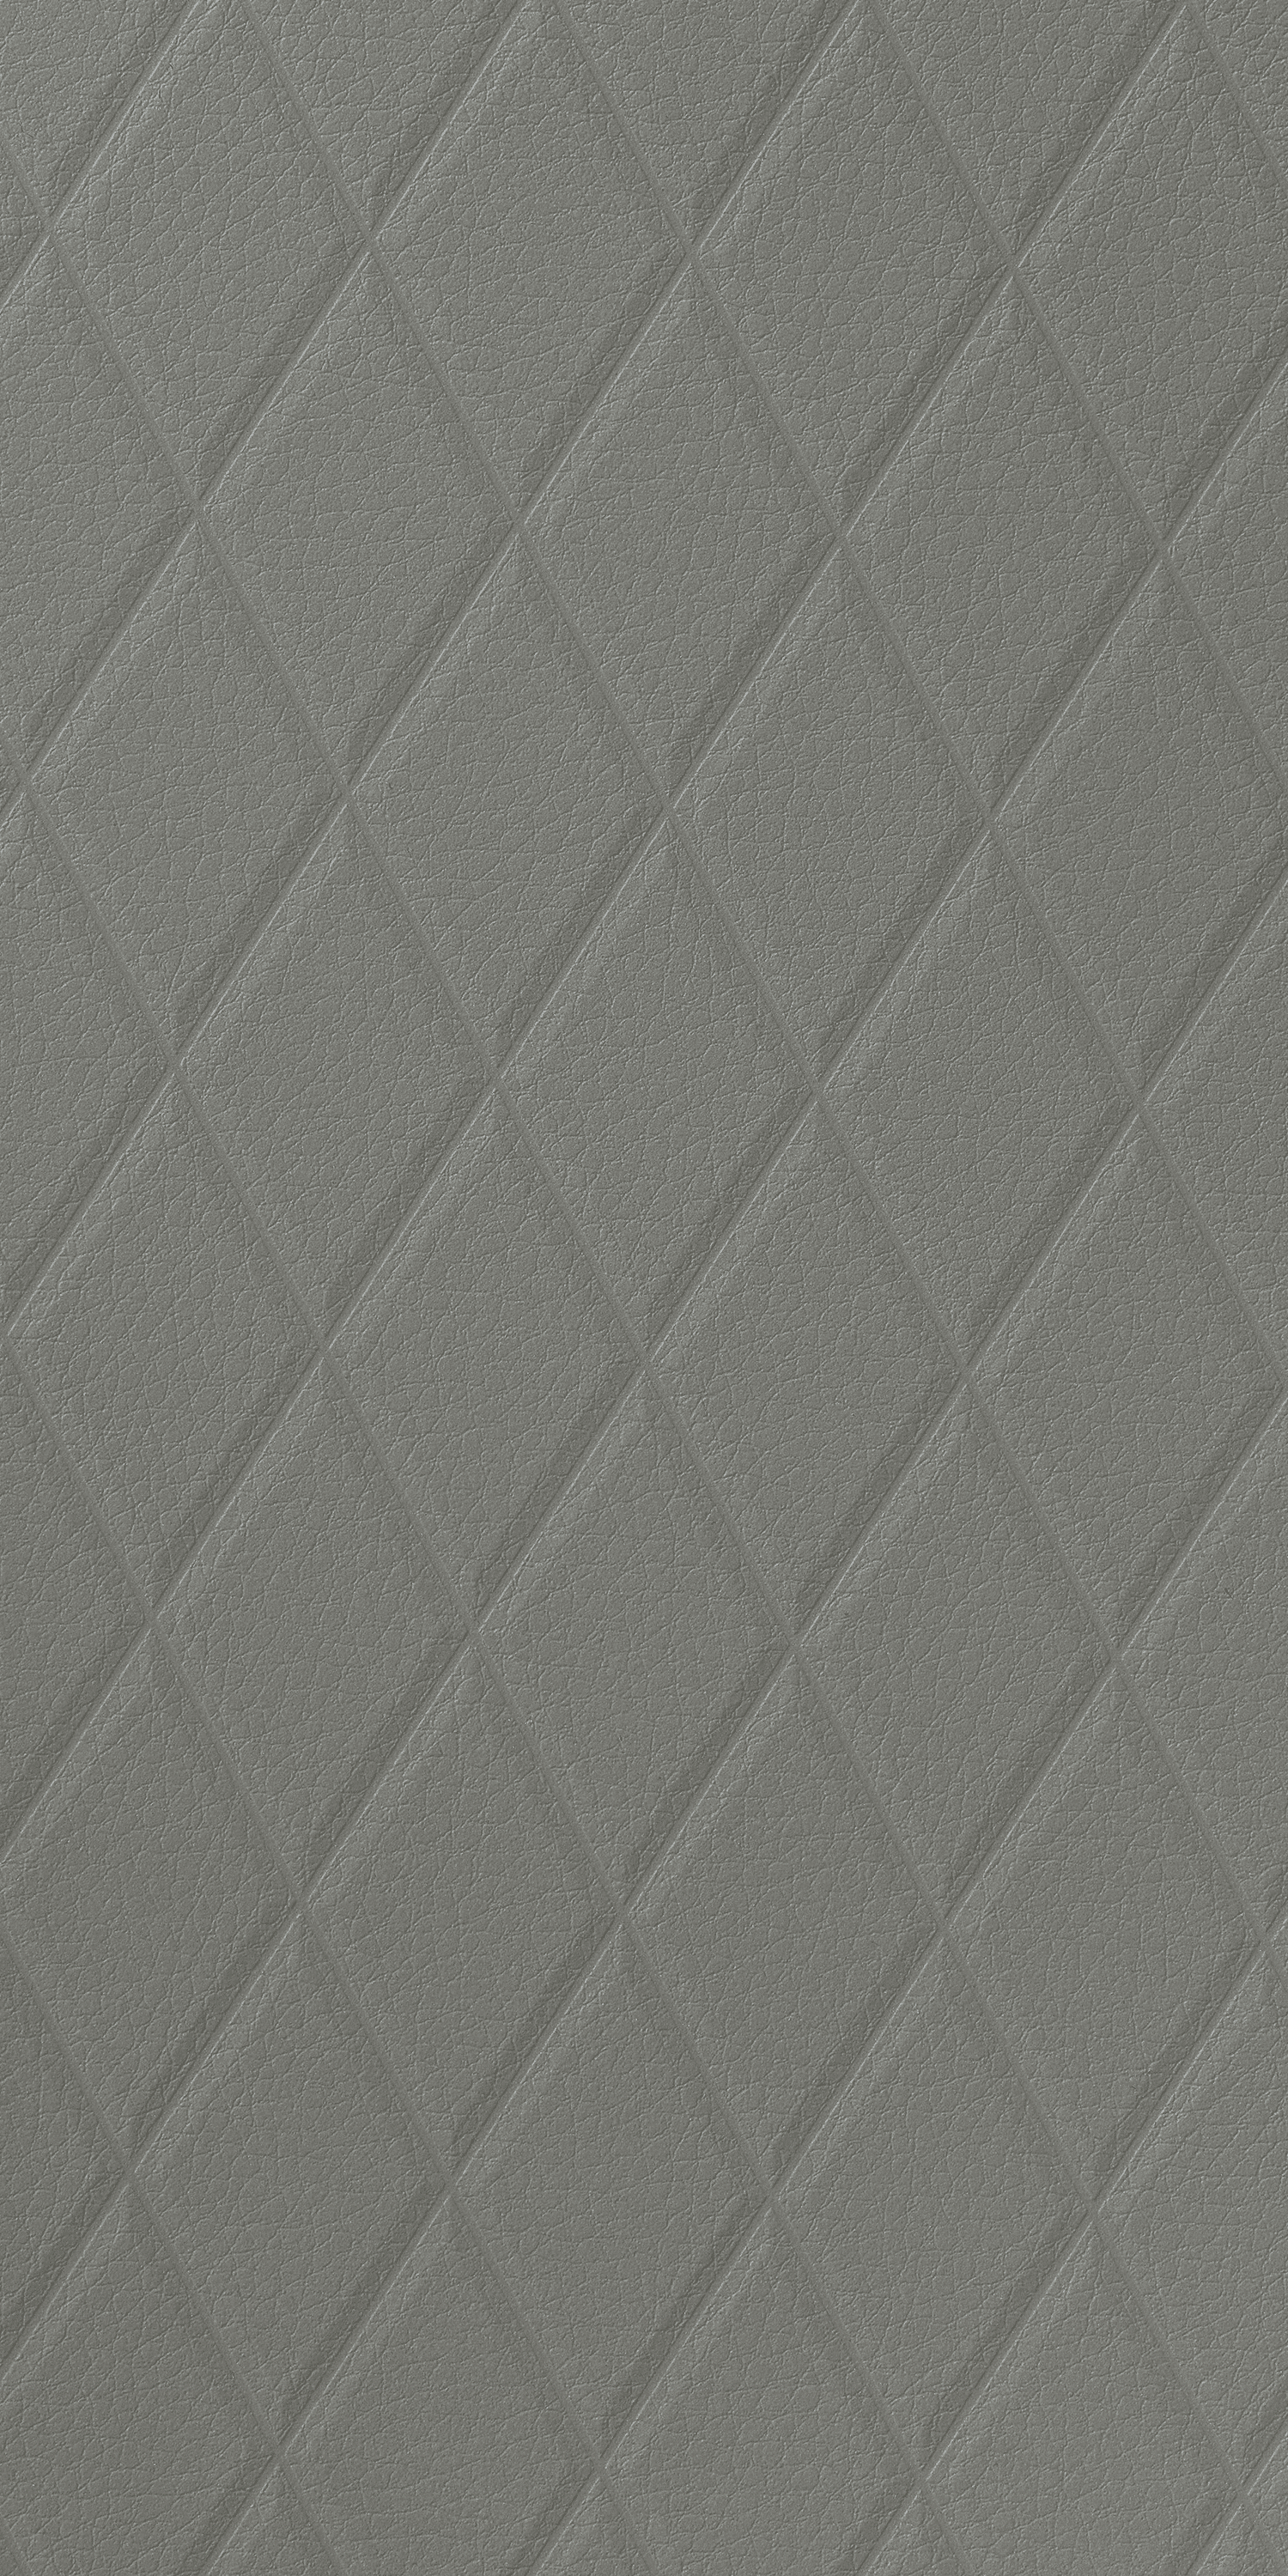 Texture Diamond Leather Laminate Sheets | Sainik Laminates - CenturyPly